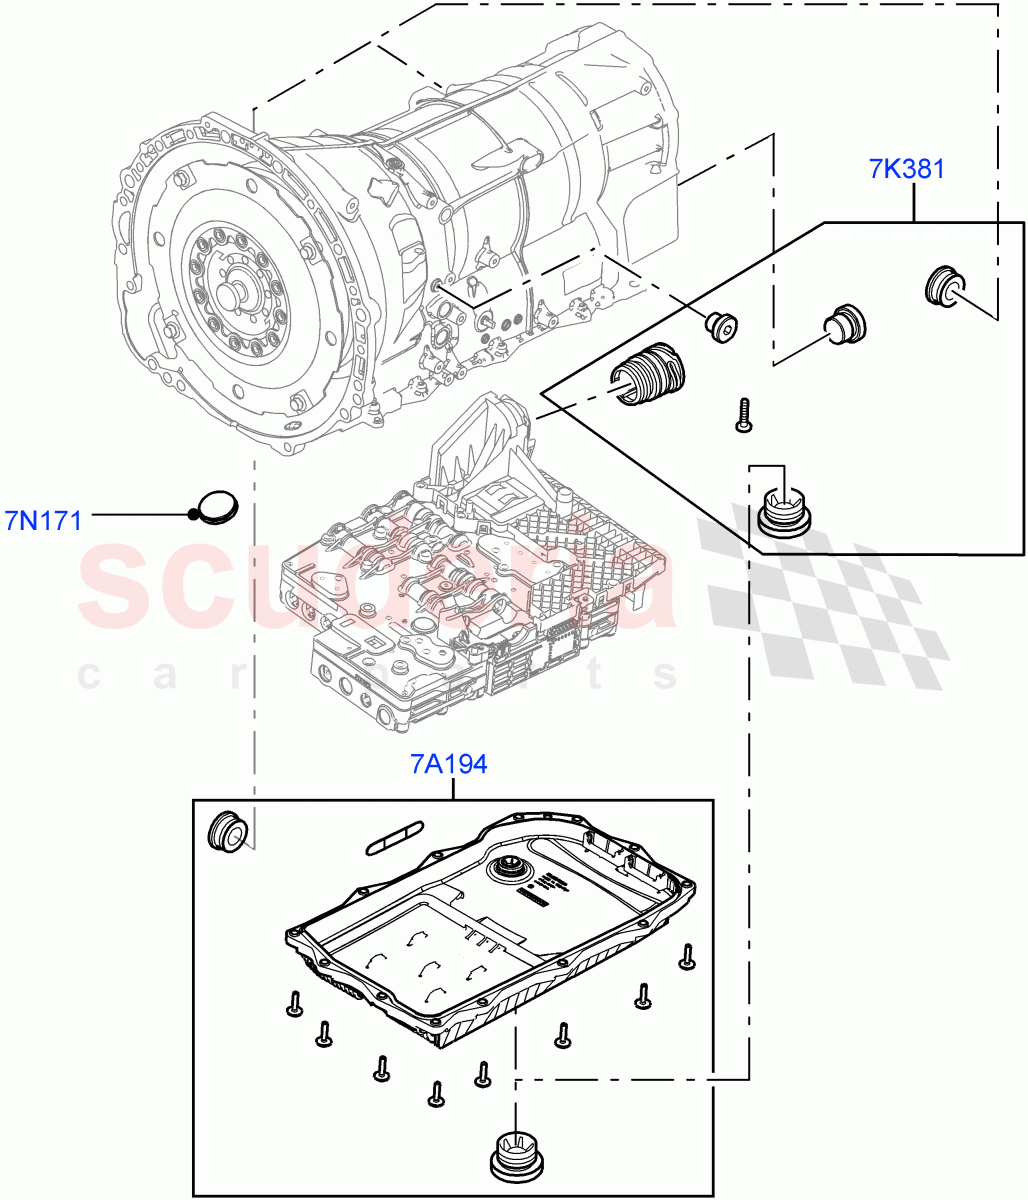 Transmission External Components(5.0L P AJ133 DOHC CDA S/C Enhanced,8 Speed Auto Trans ZF 8HP70 4WD)((V)FROMKA000001) of Land Rover Land Rover Range Rover Velar (2017+) [3.0 I6 Turbo Petrol AJ20P6]